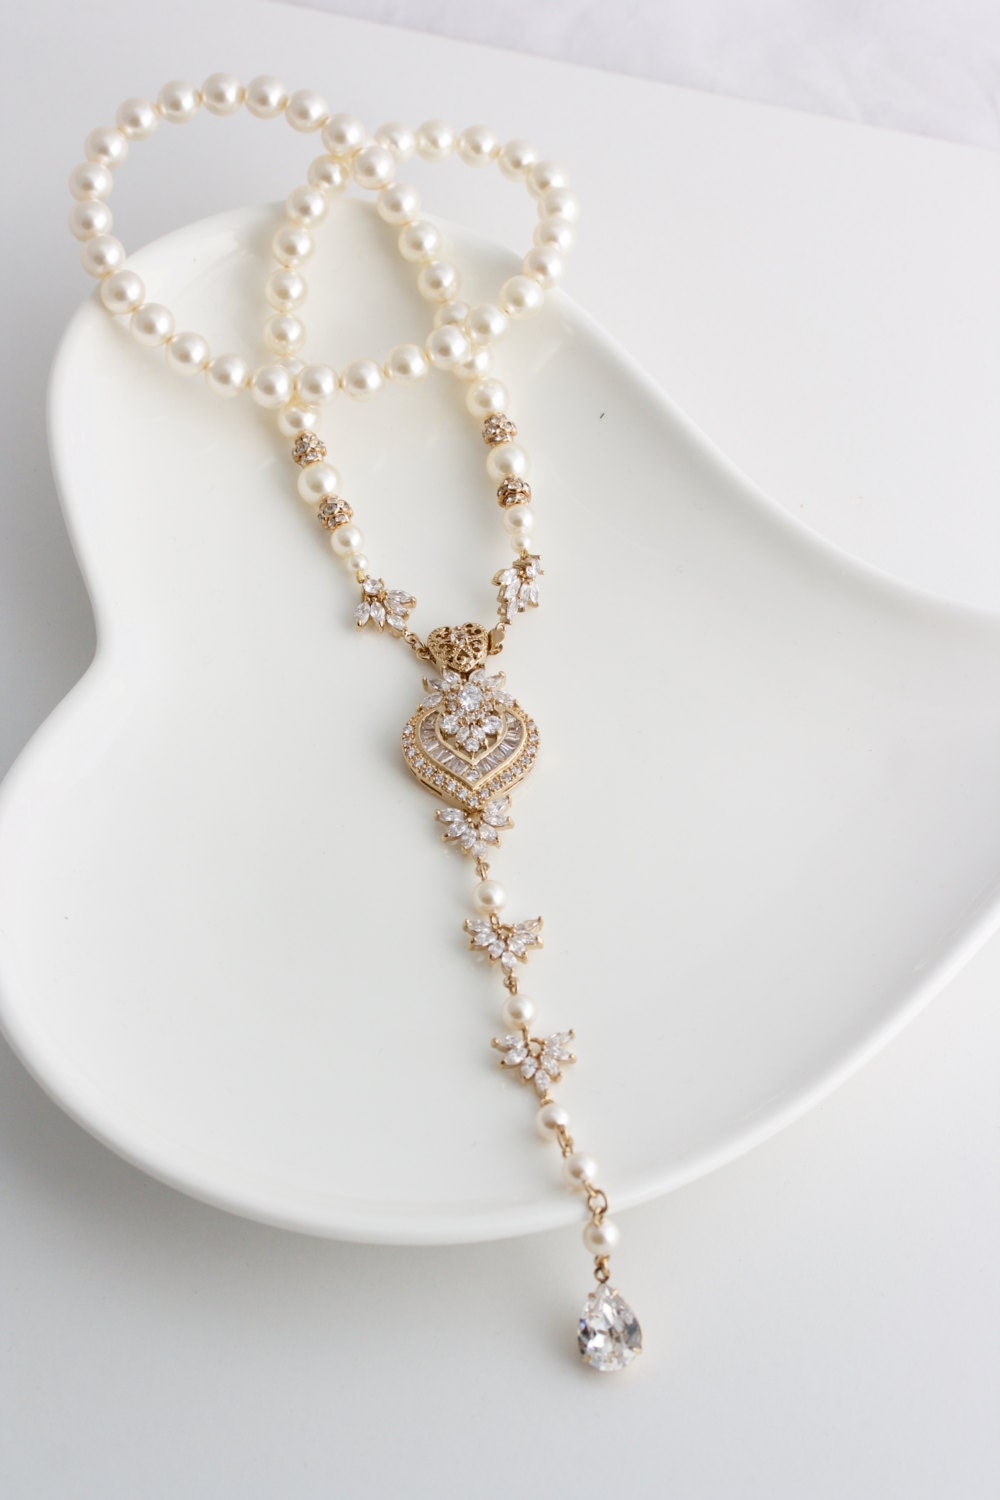 Wedding Jewelry Gold Backdrop Necklace Long Back Drop Bridal | Etsy